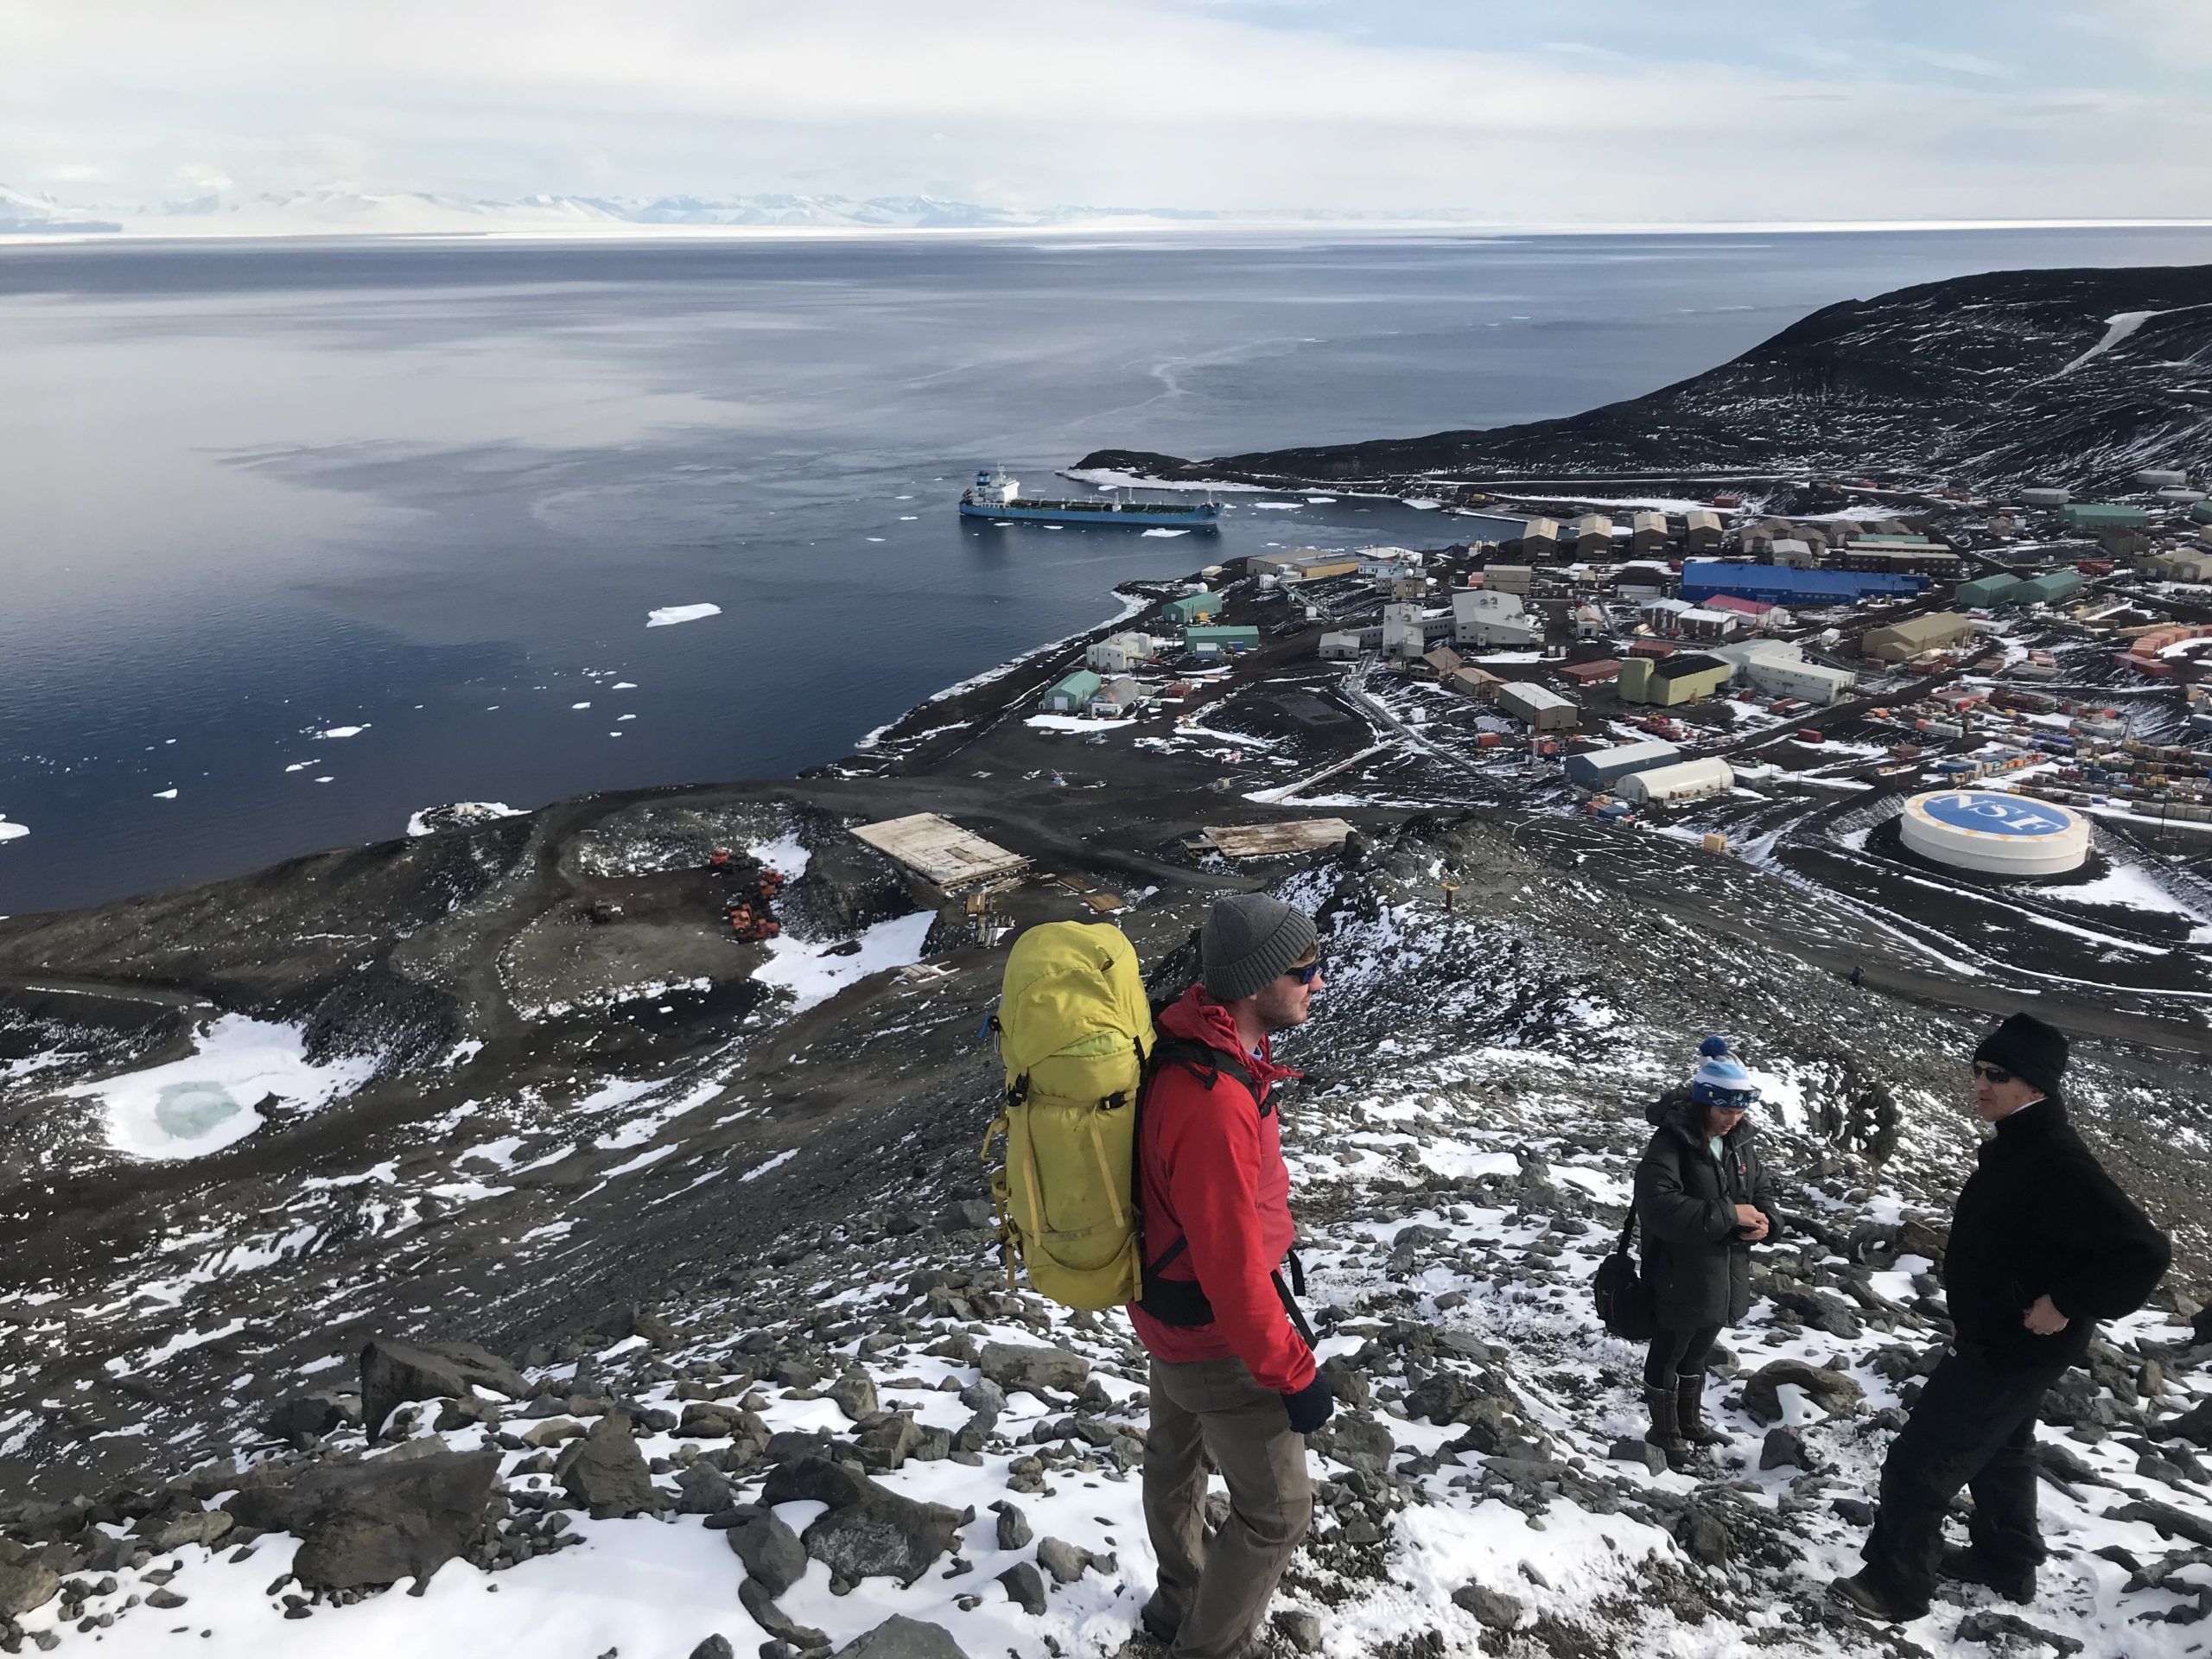 Overlooking McMurdo
